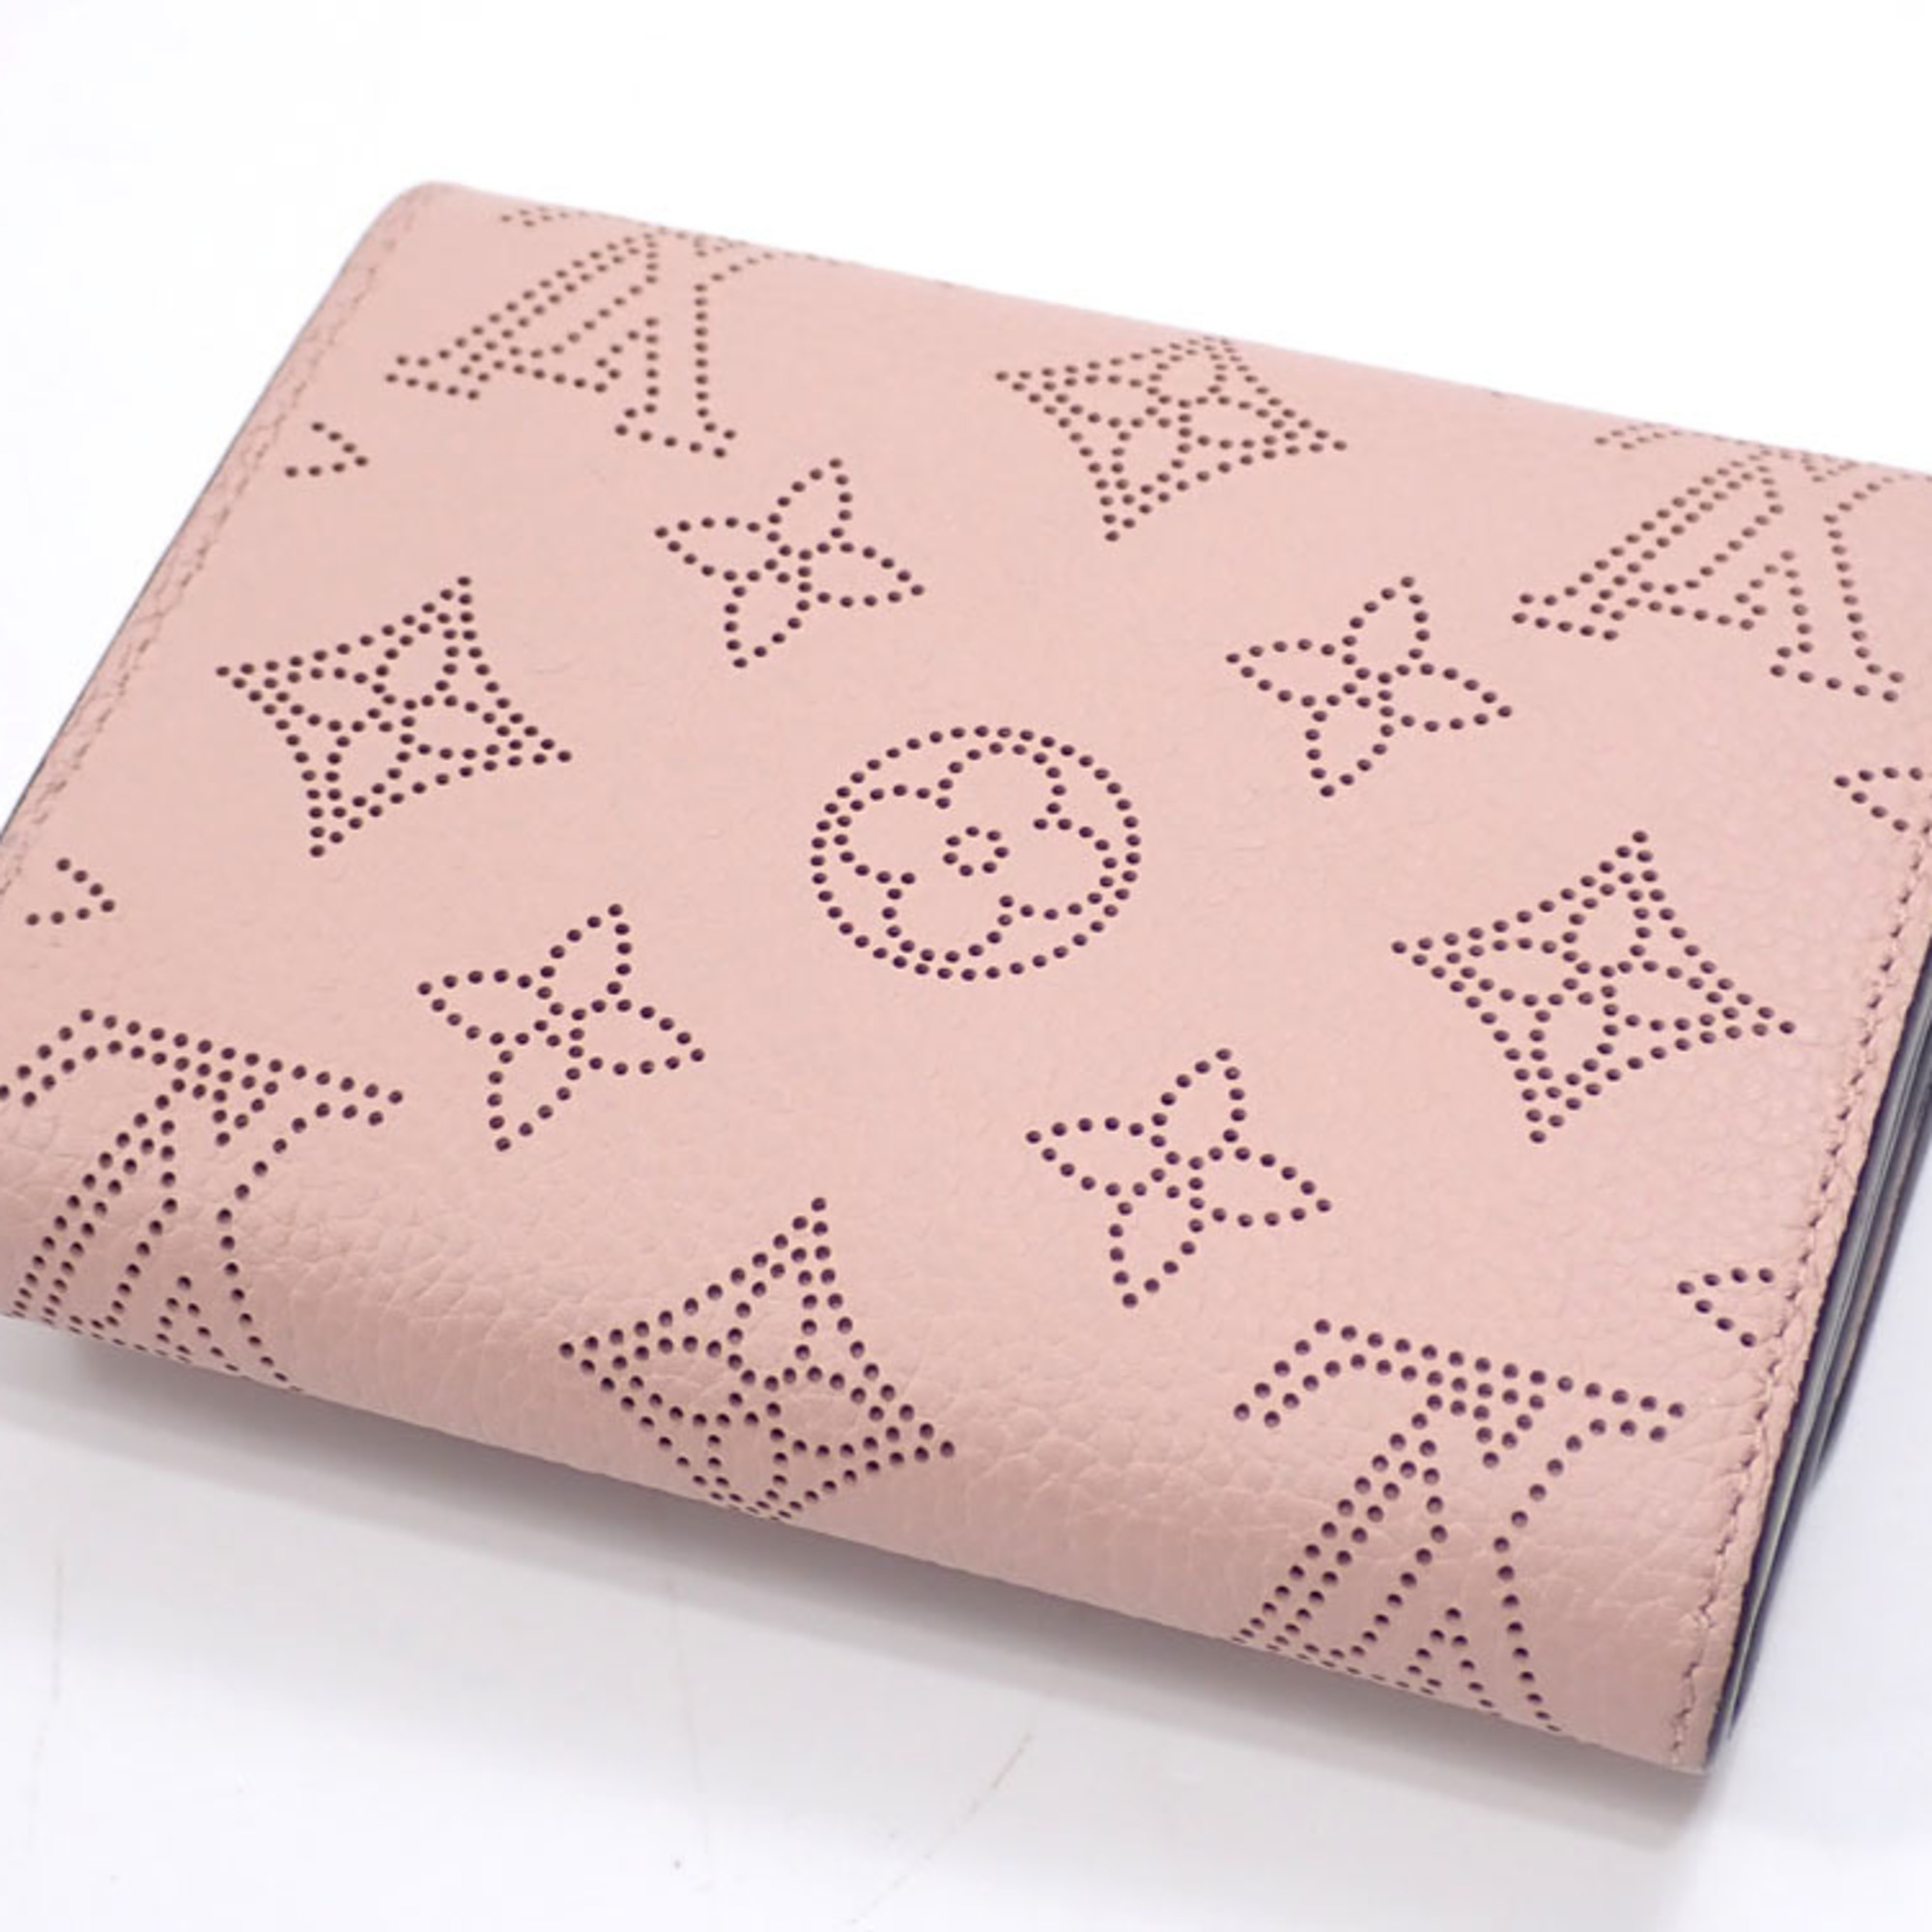 Louis Vuitton Bi-fold Wallet Mahina Portefeuille Iris Compact Women's M82757 Rose Jasmine Pink